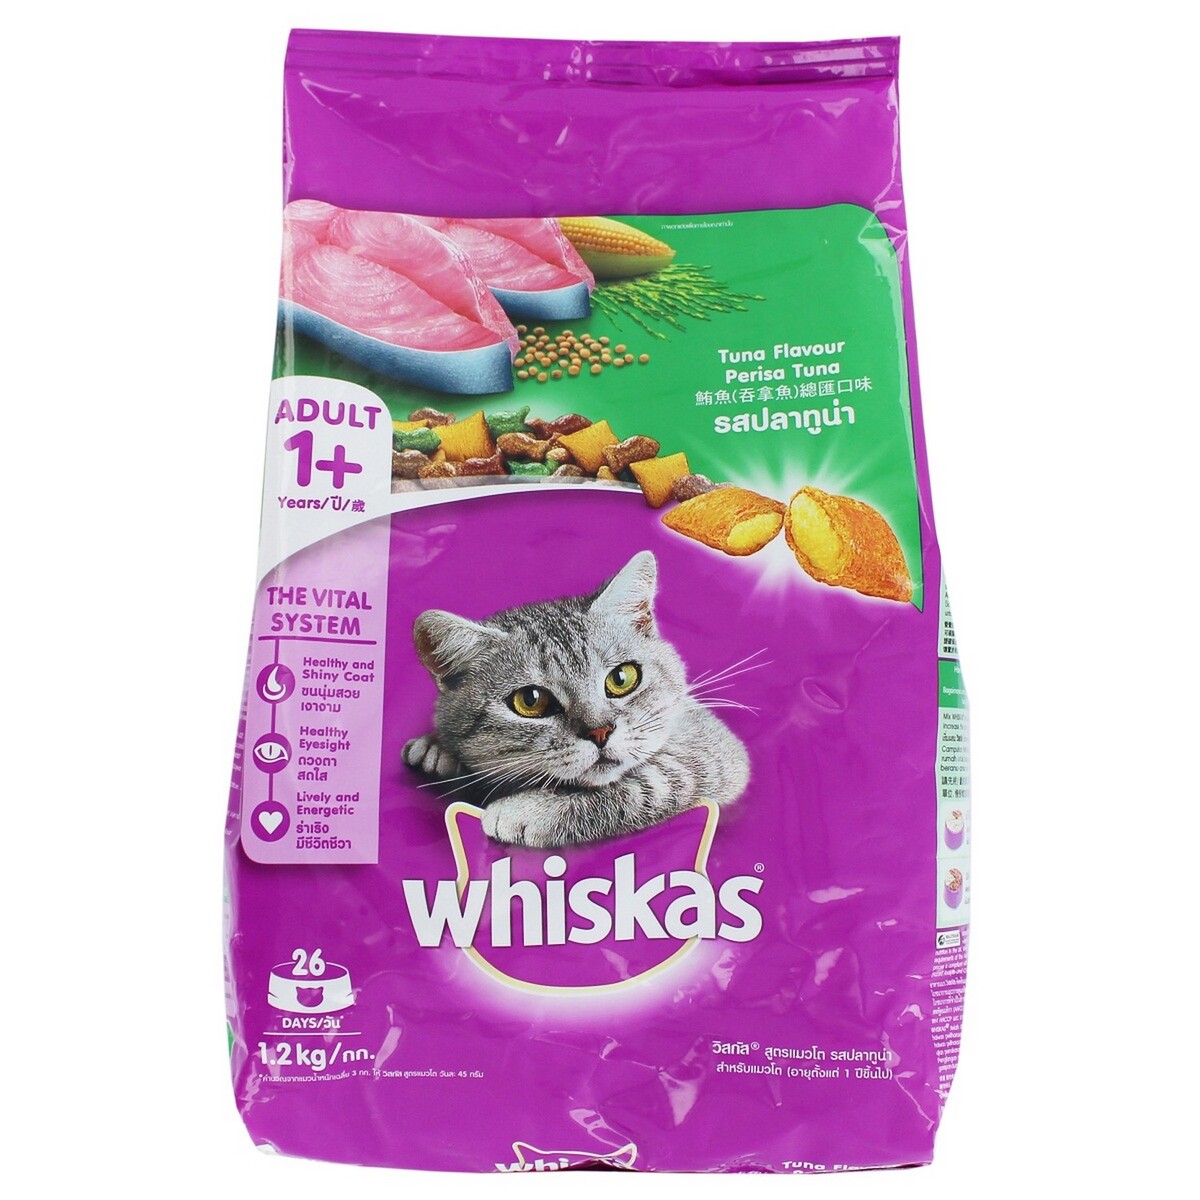 Whiskas Pet Food Tuna Adult 1.2Kg